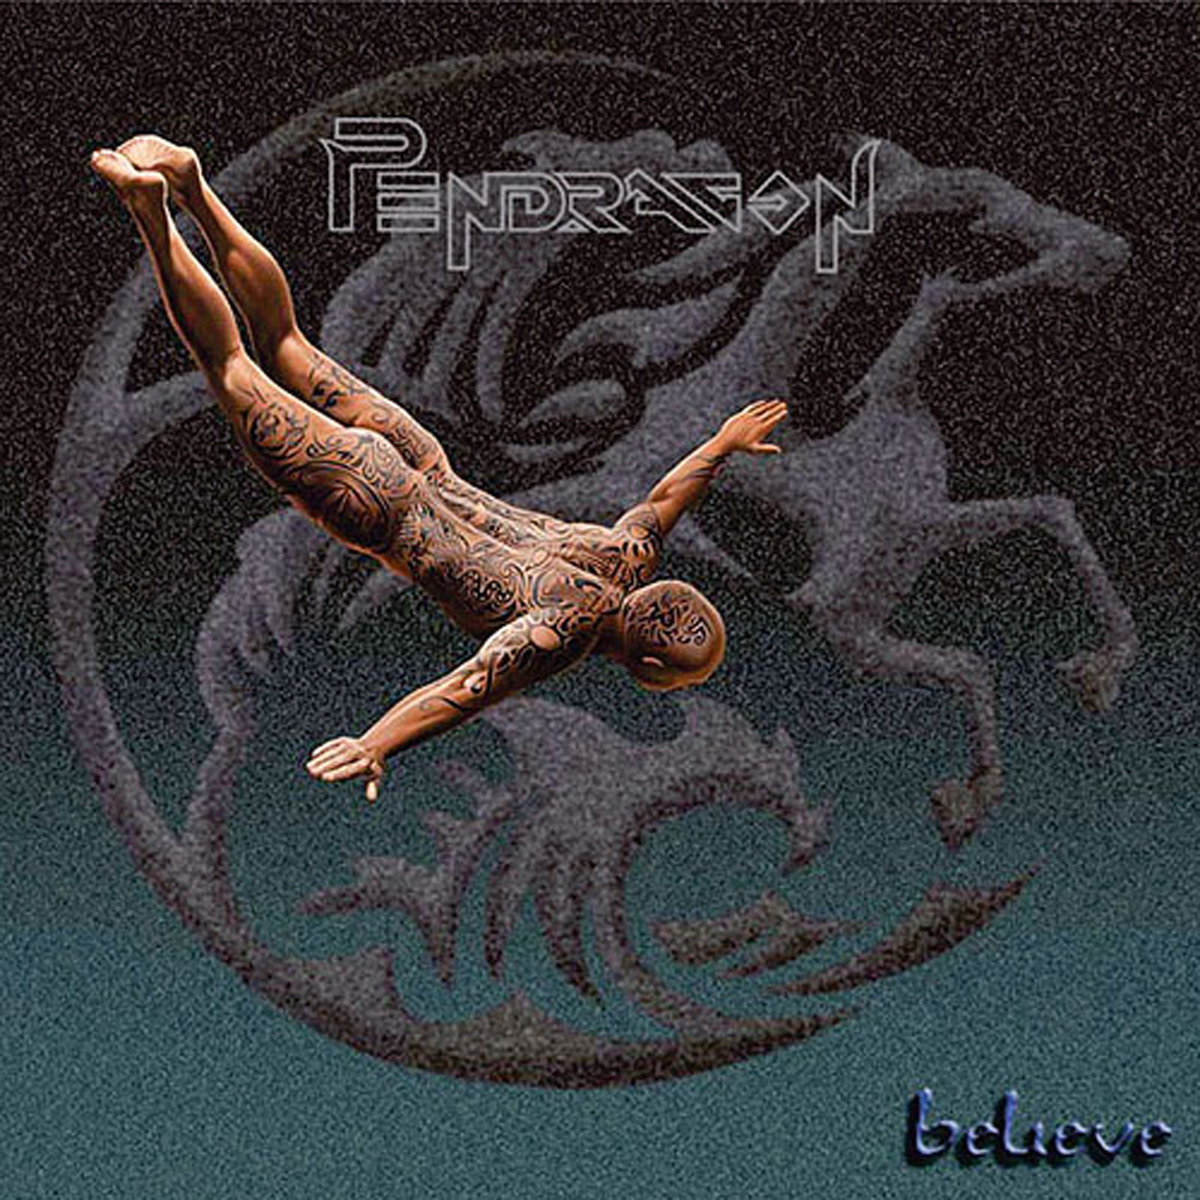 Pendragon - Believe (2005)